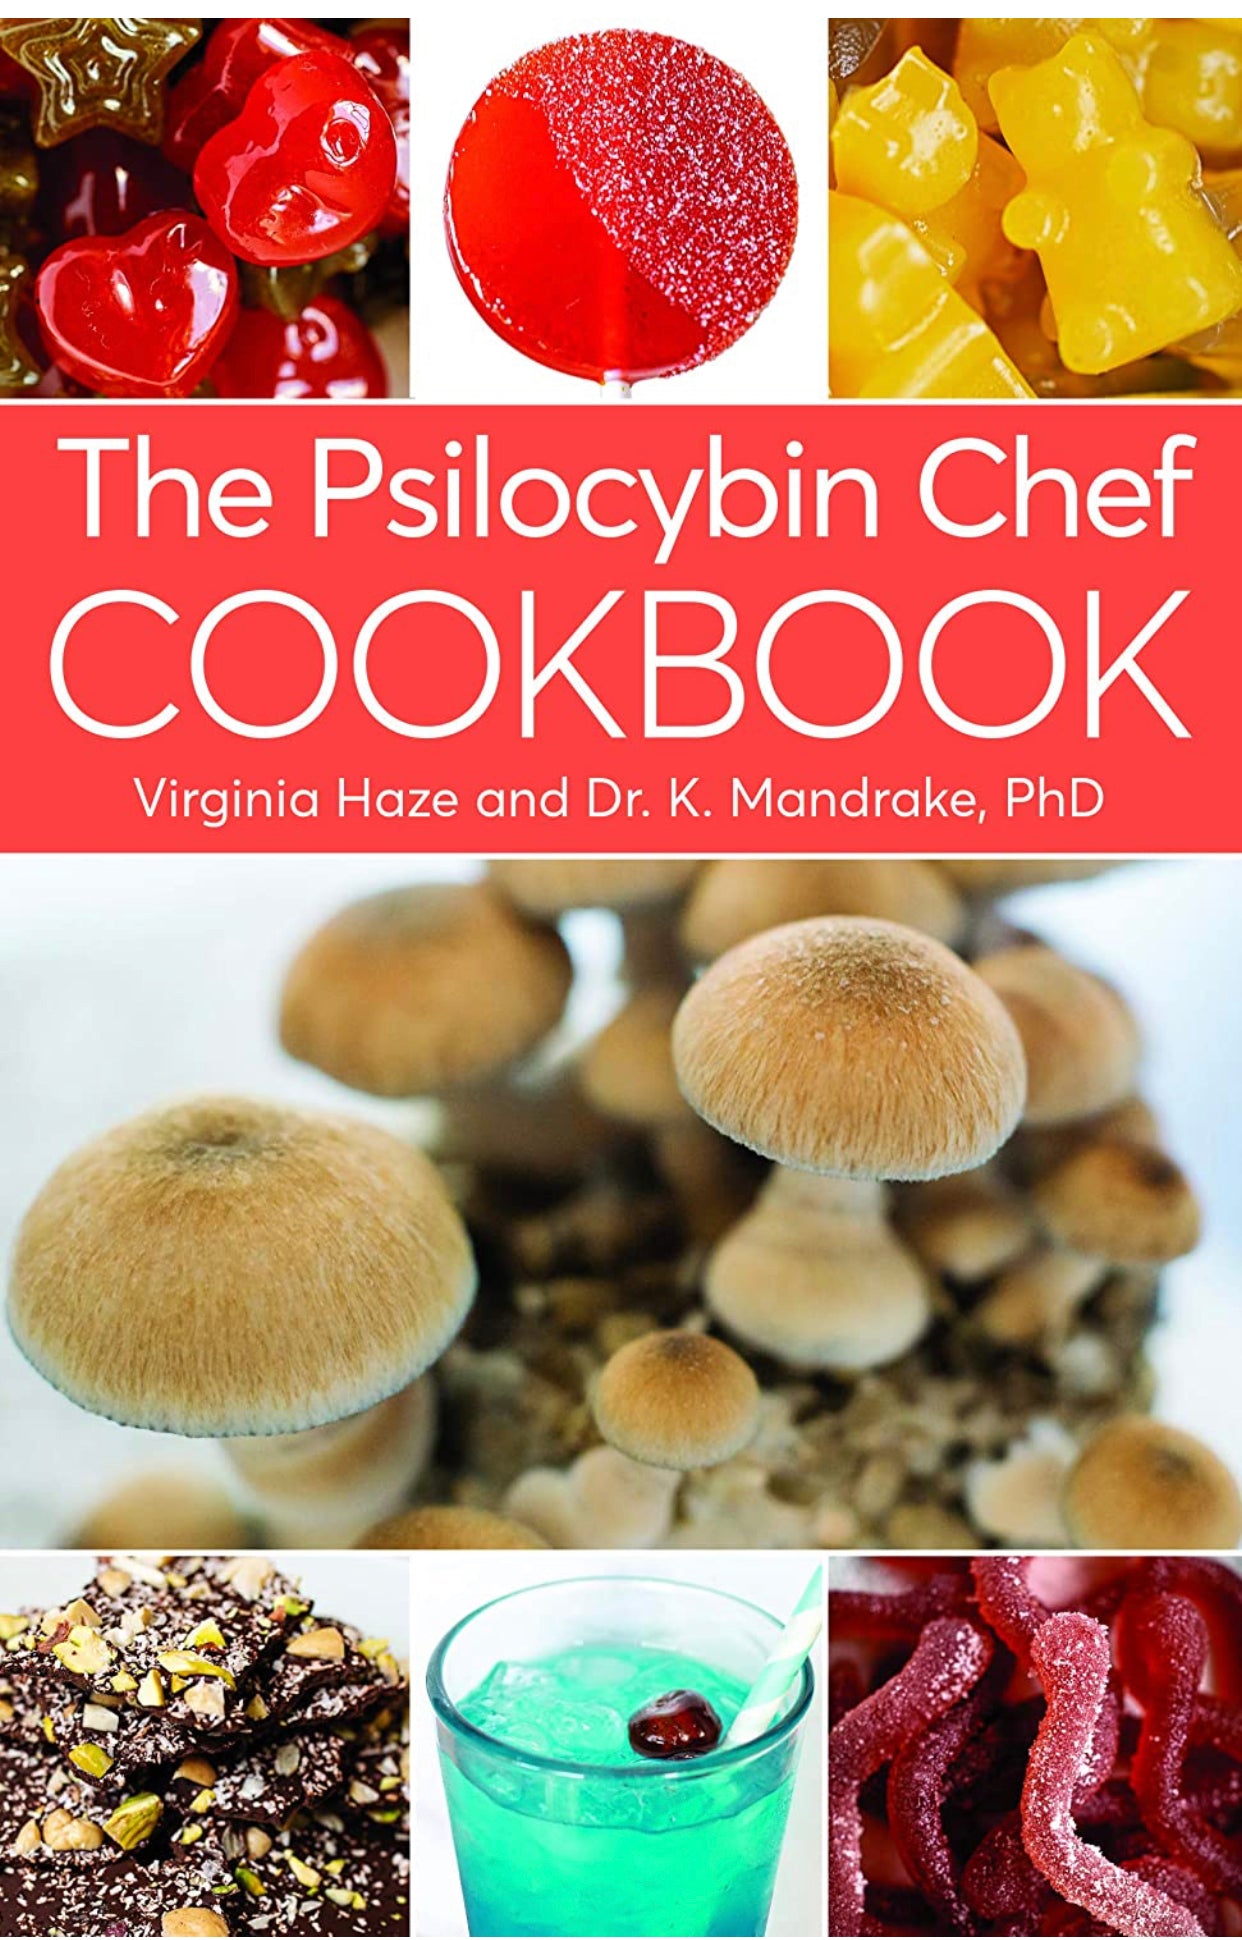 MycoPunks - The Psilocybin Chef Cookbook (paperback) - Book